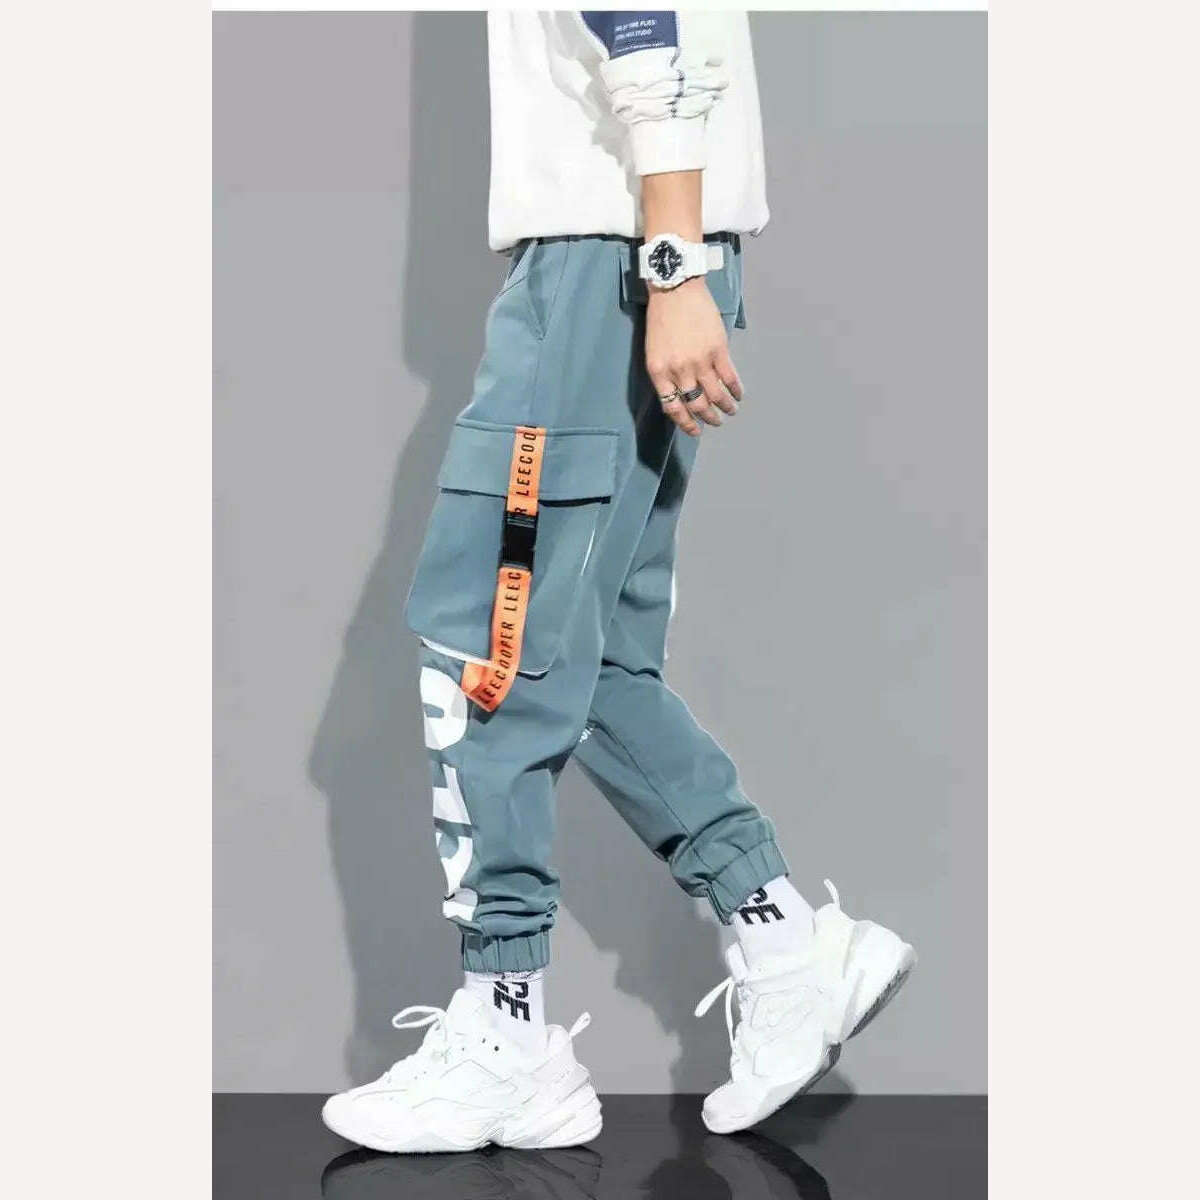 KIMLUD, Hip Hop Cargo Pants Men Streetwear Cotton Joggers Fashion Sweatpants Male Casual Harem Trousers Summer Harajuku Pants Men Women, KIMLUD Womens Clothes